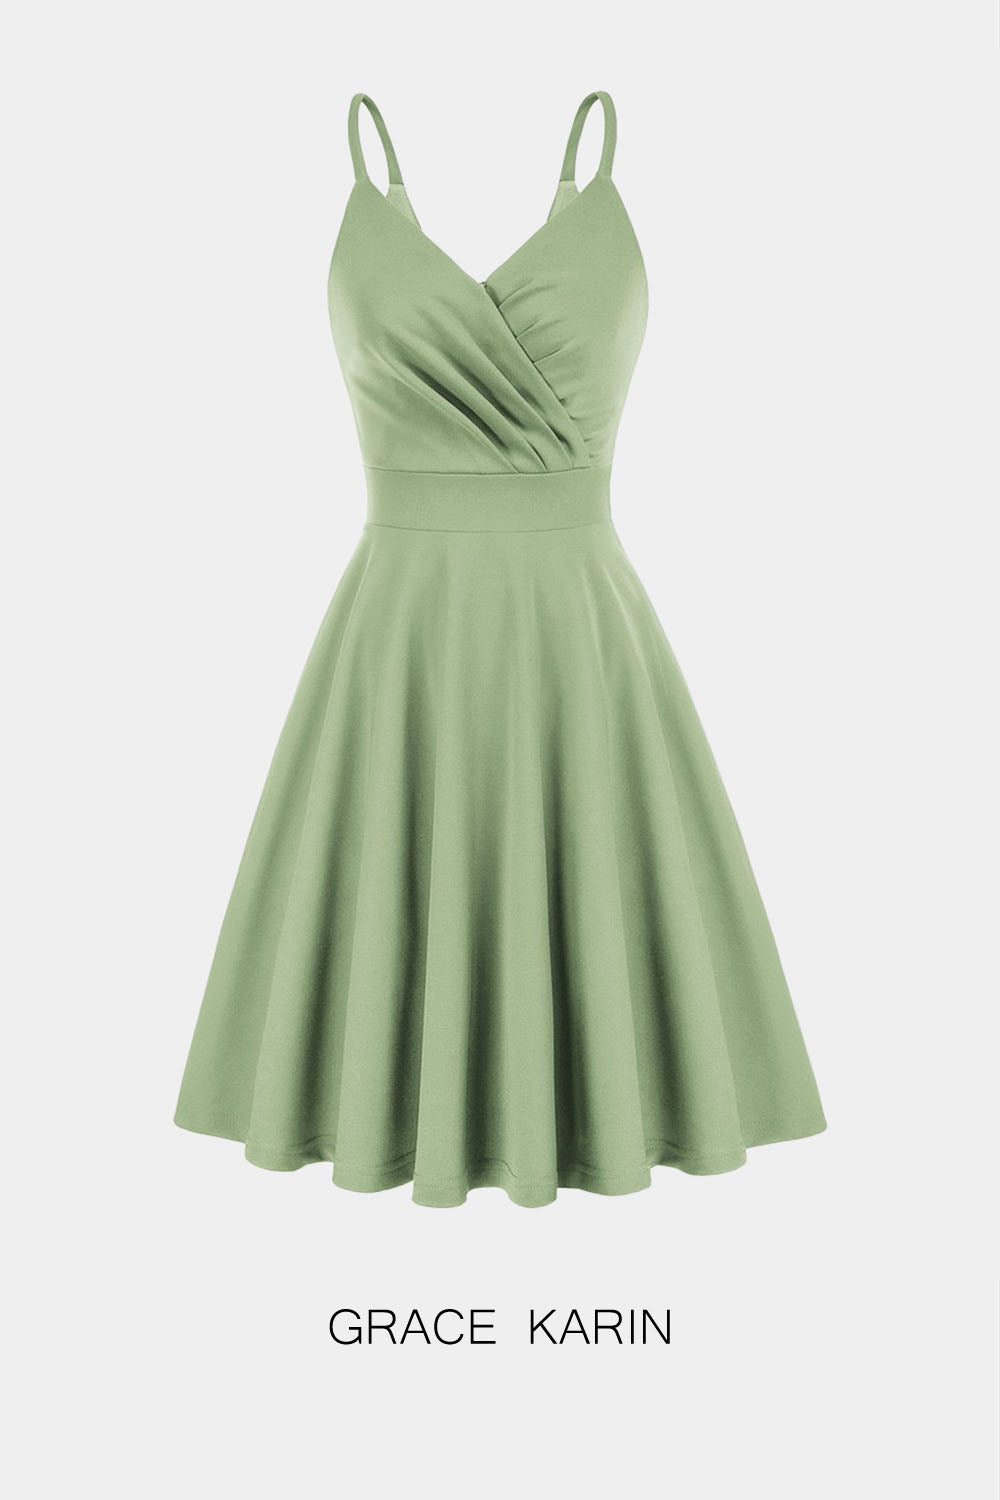 【$19.99 Flash Sale!】GRACE KARIN Cami Pleated Bodice Flared A-Line Sleeveless Dress